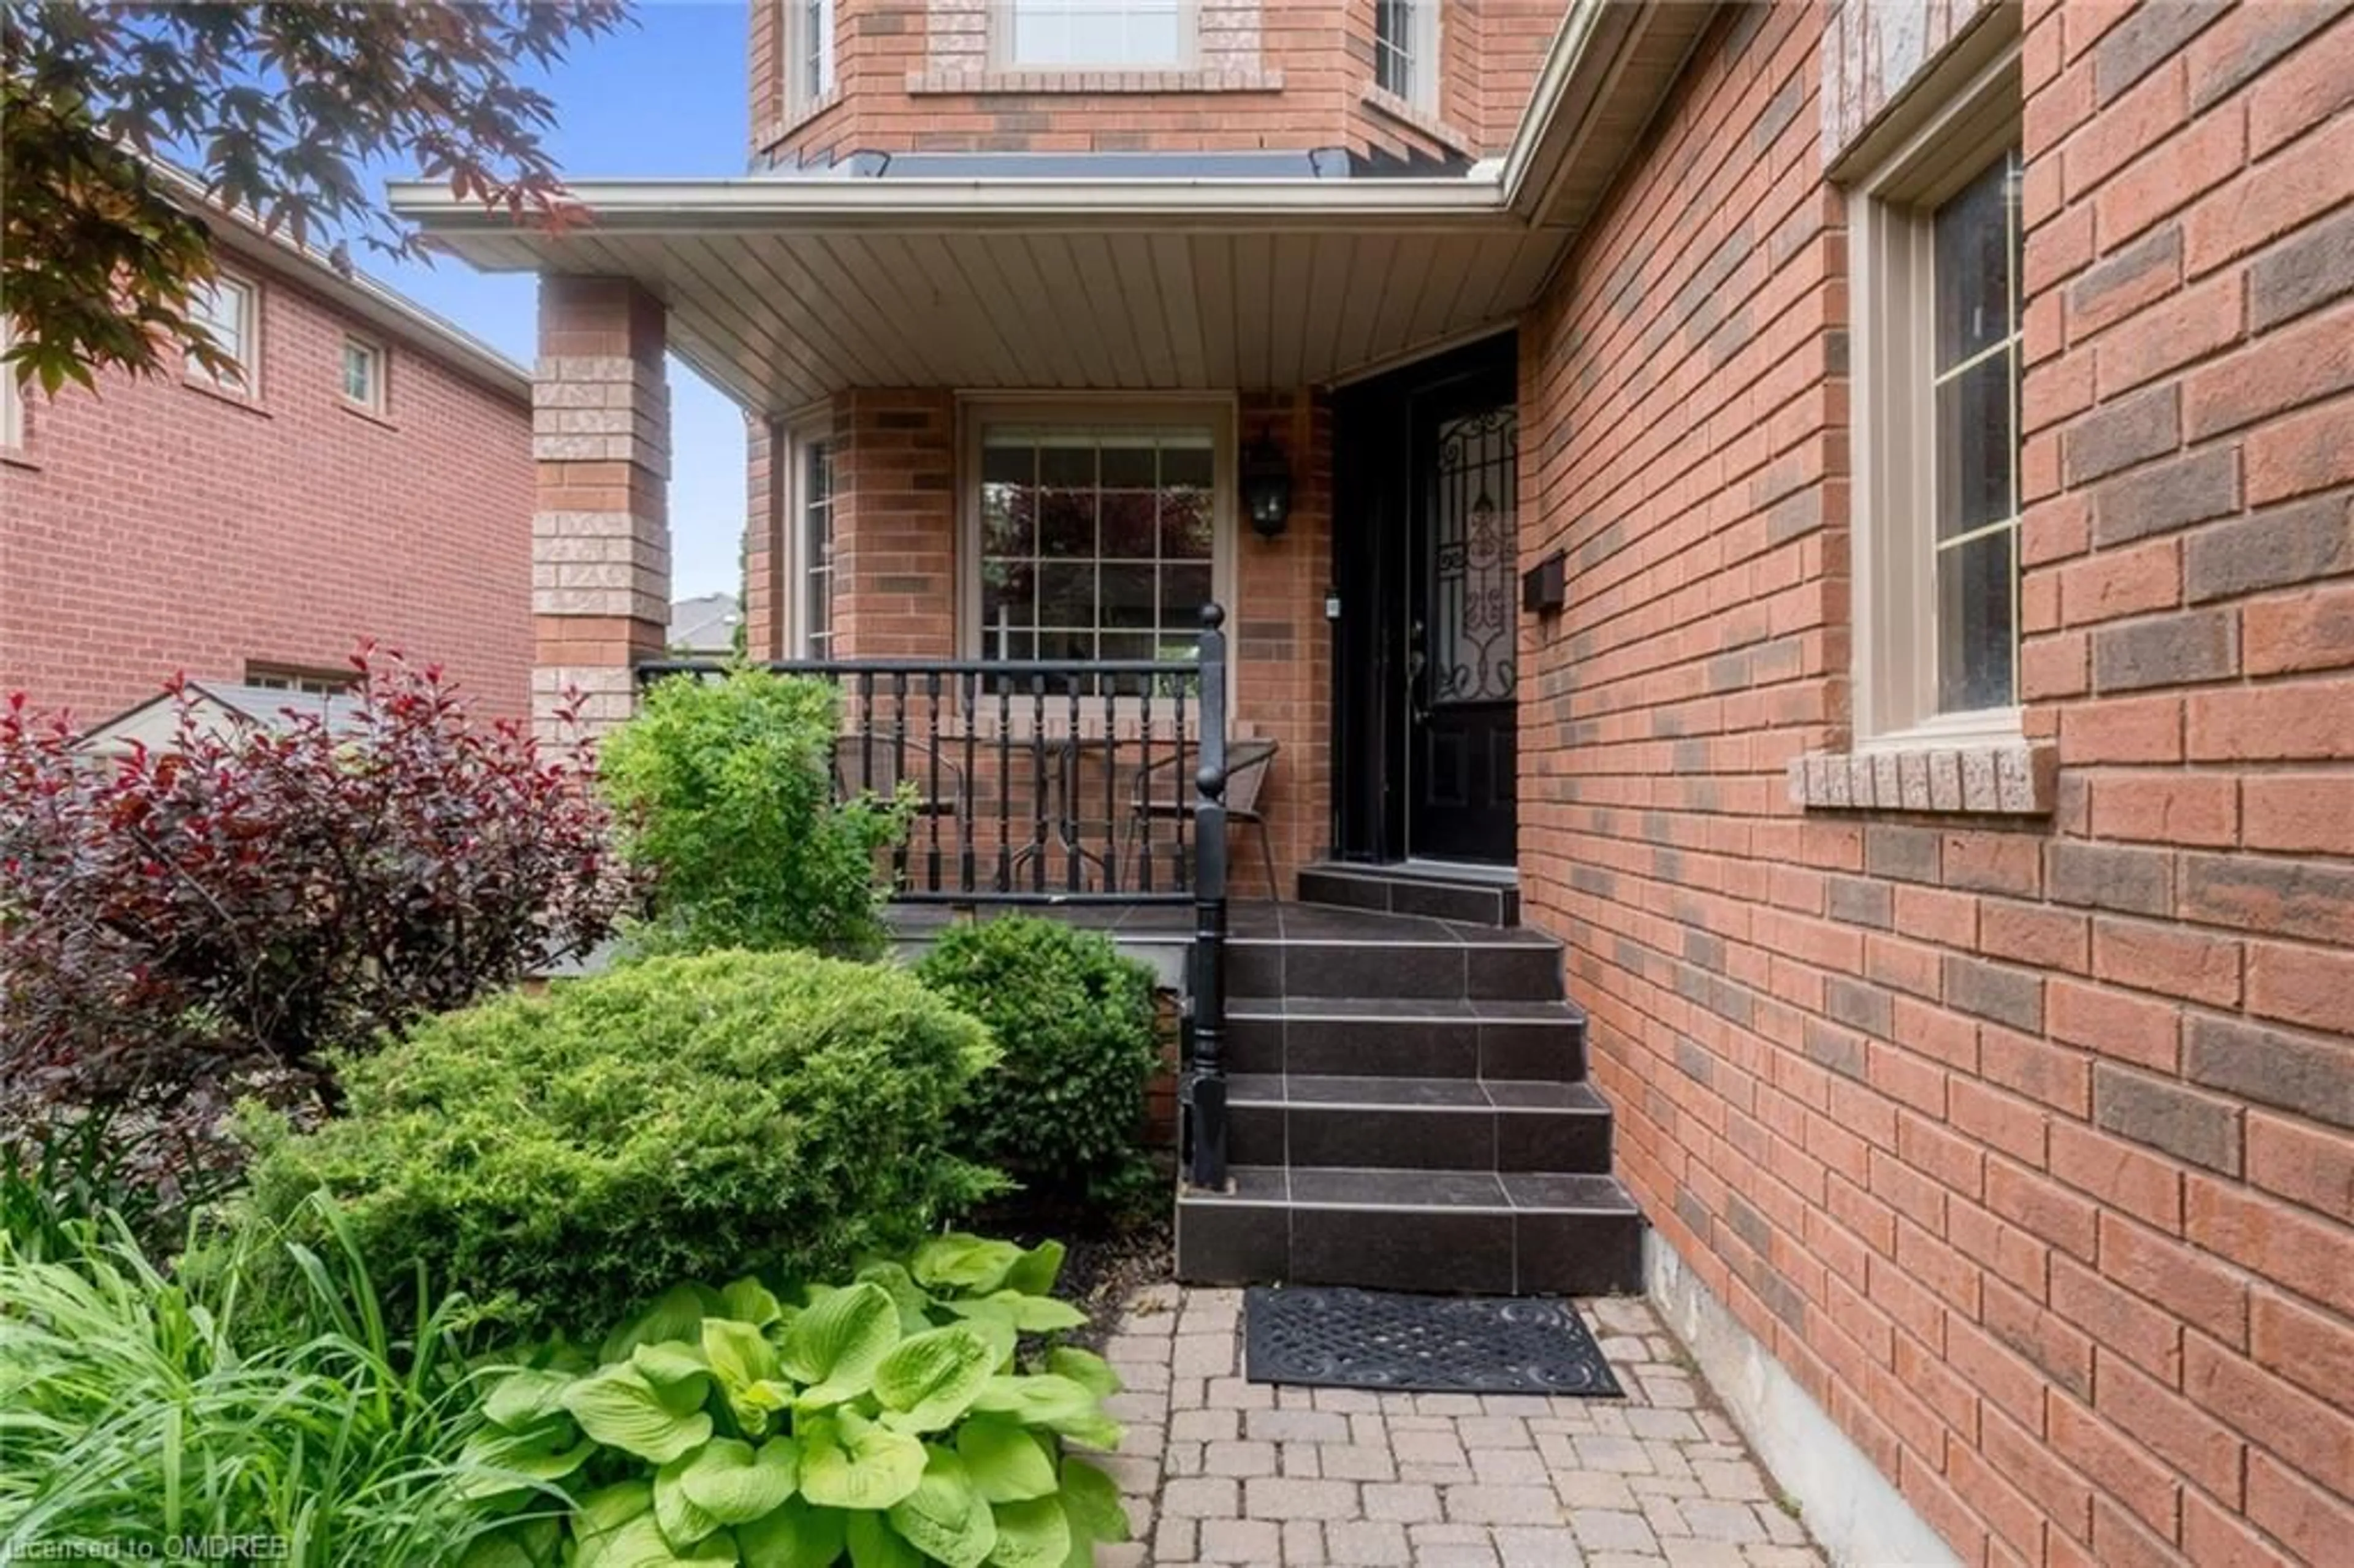 Home with brick exterior material for 53 Gooderham Dr, Halton Ontario L7G 5R6